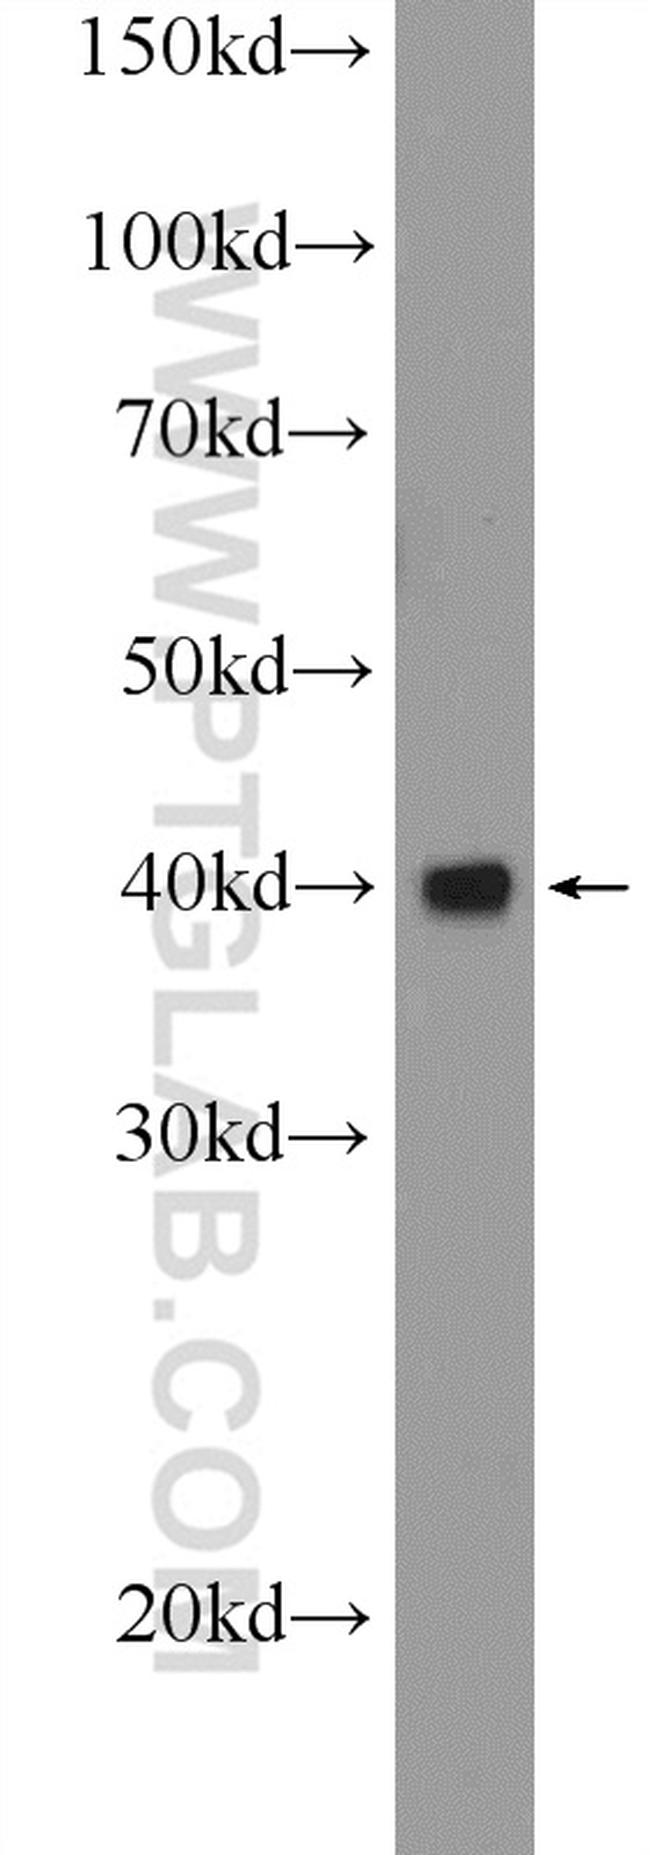 FBXO2 Antibody in Western Blot (WB)